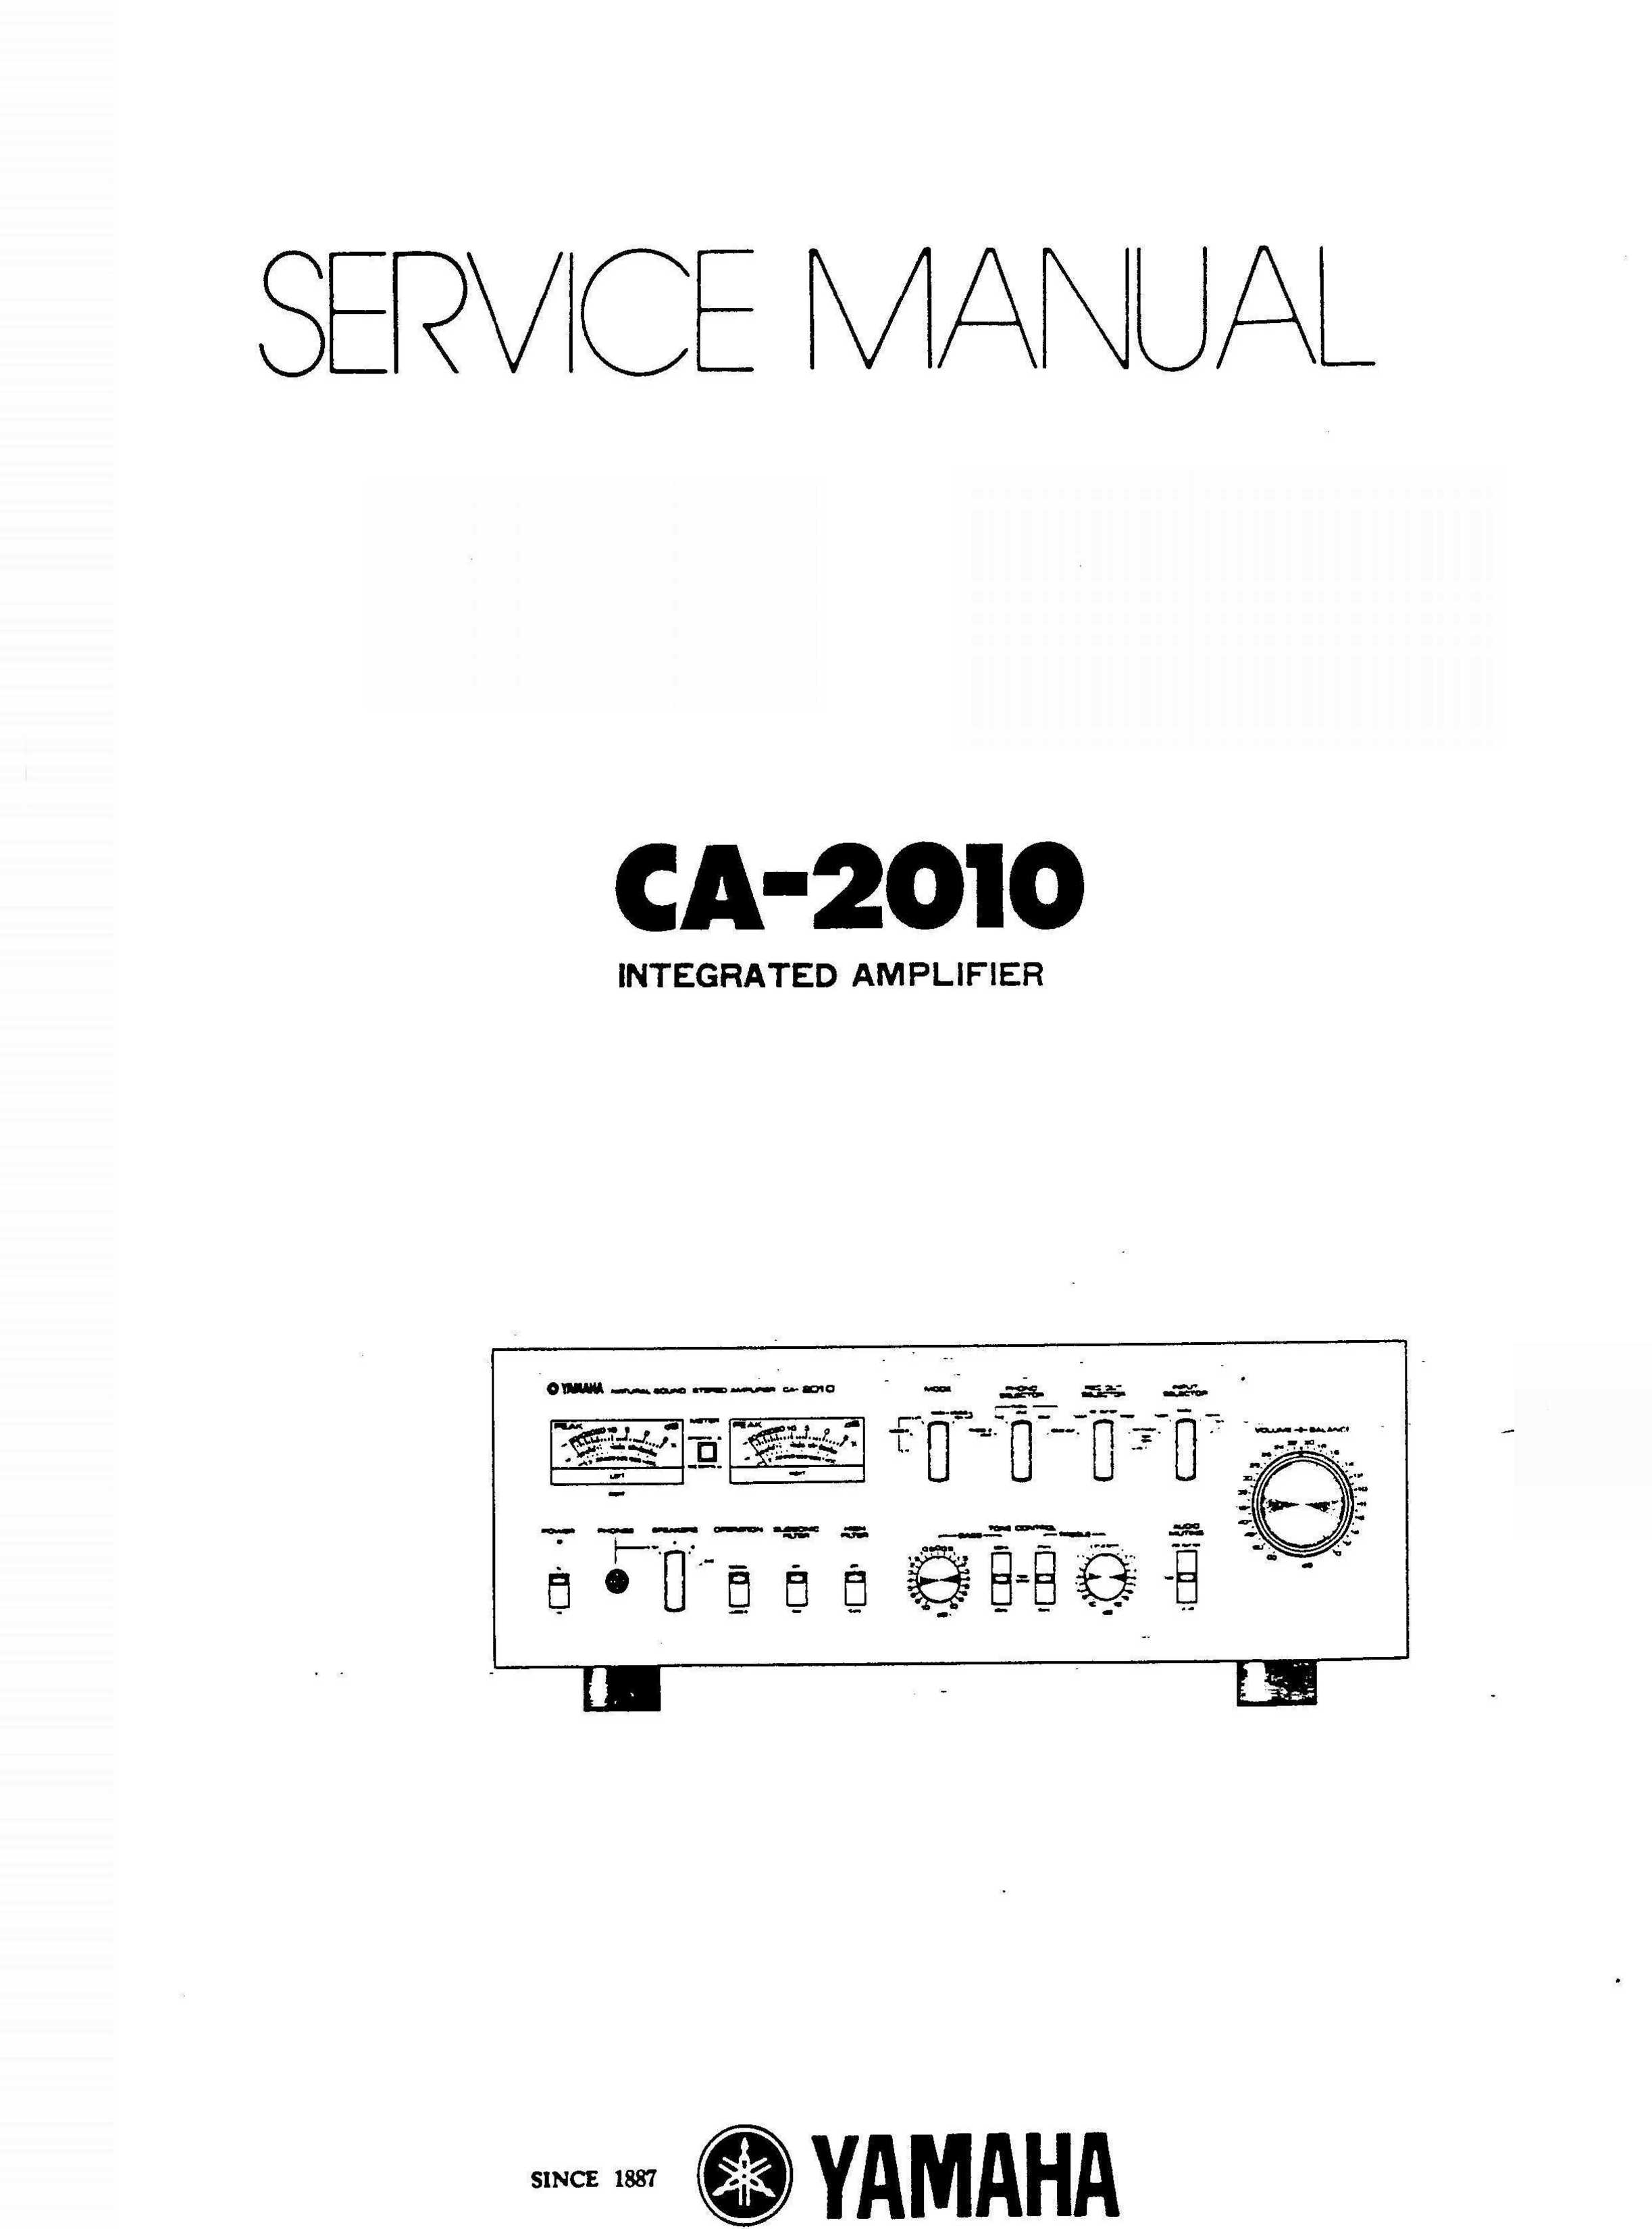 Yamaha CA-2010 Service Manual